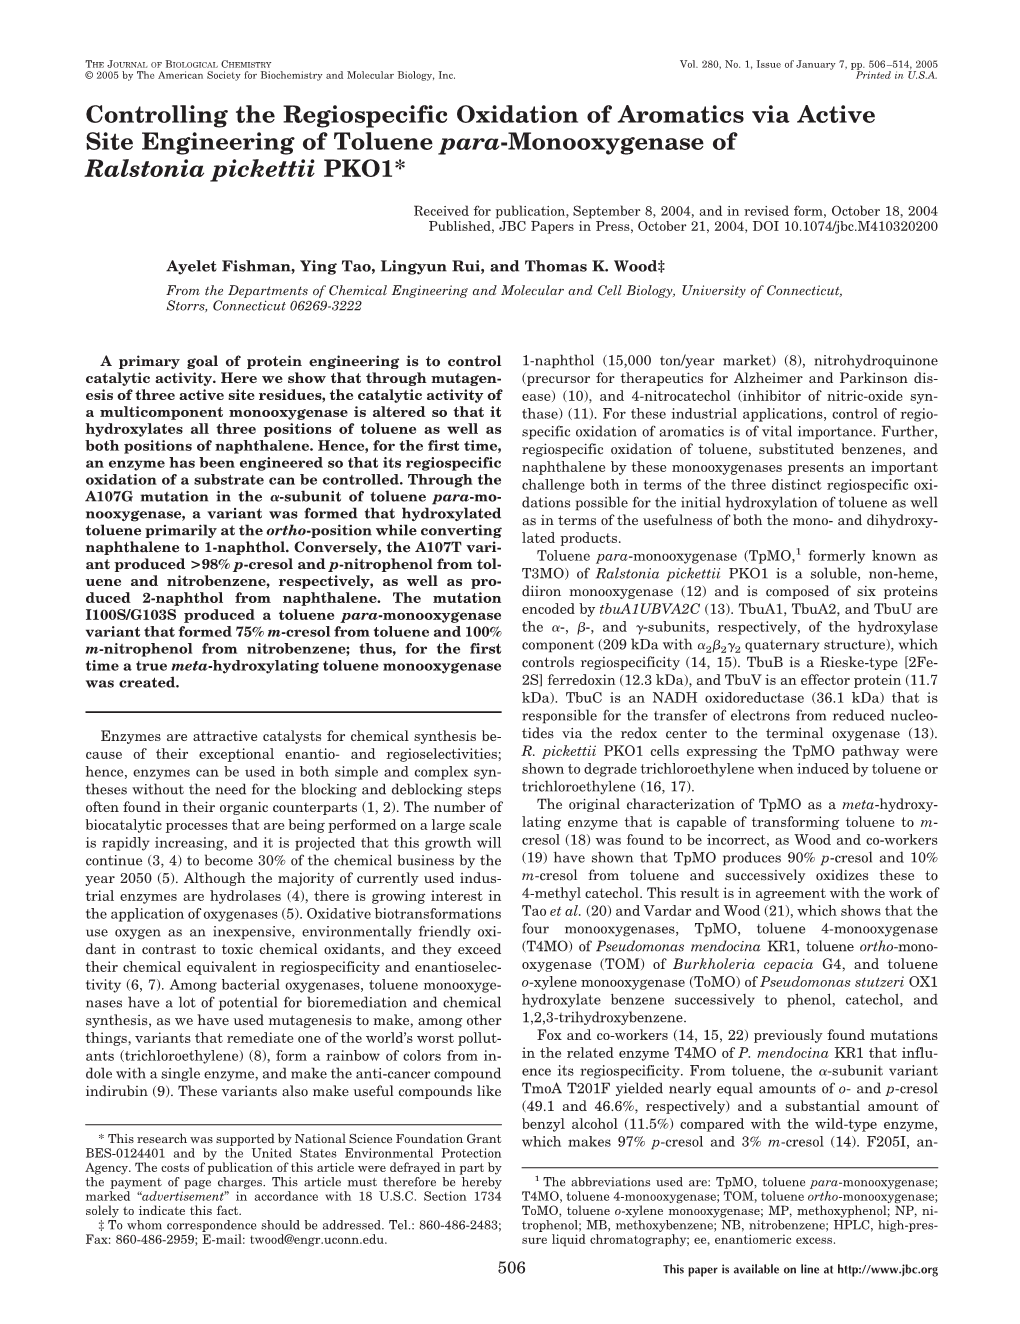 Controlling the Regiospecific Oxidation of Aromatics Via Active Site Engineering of Toluene Para-Monooxygenase of Ralstonia Pickettii PKO1*